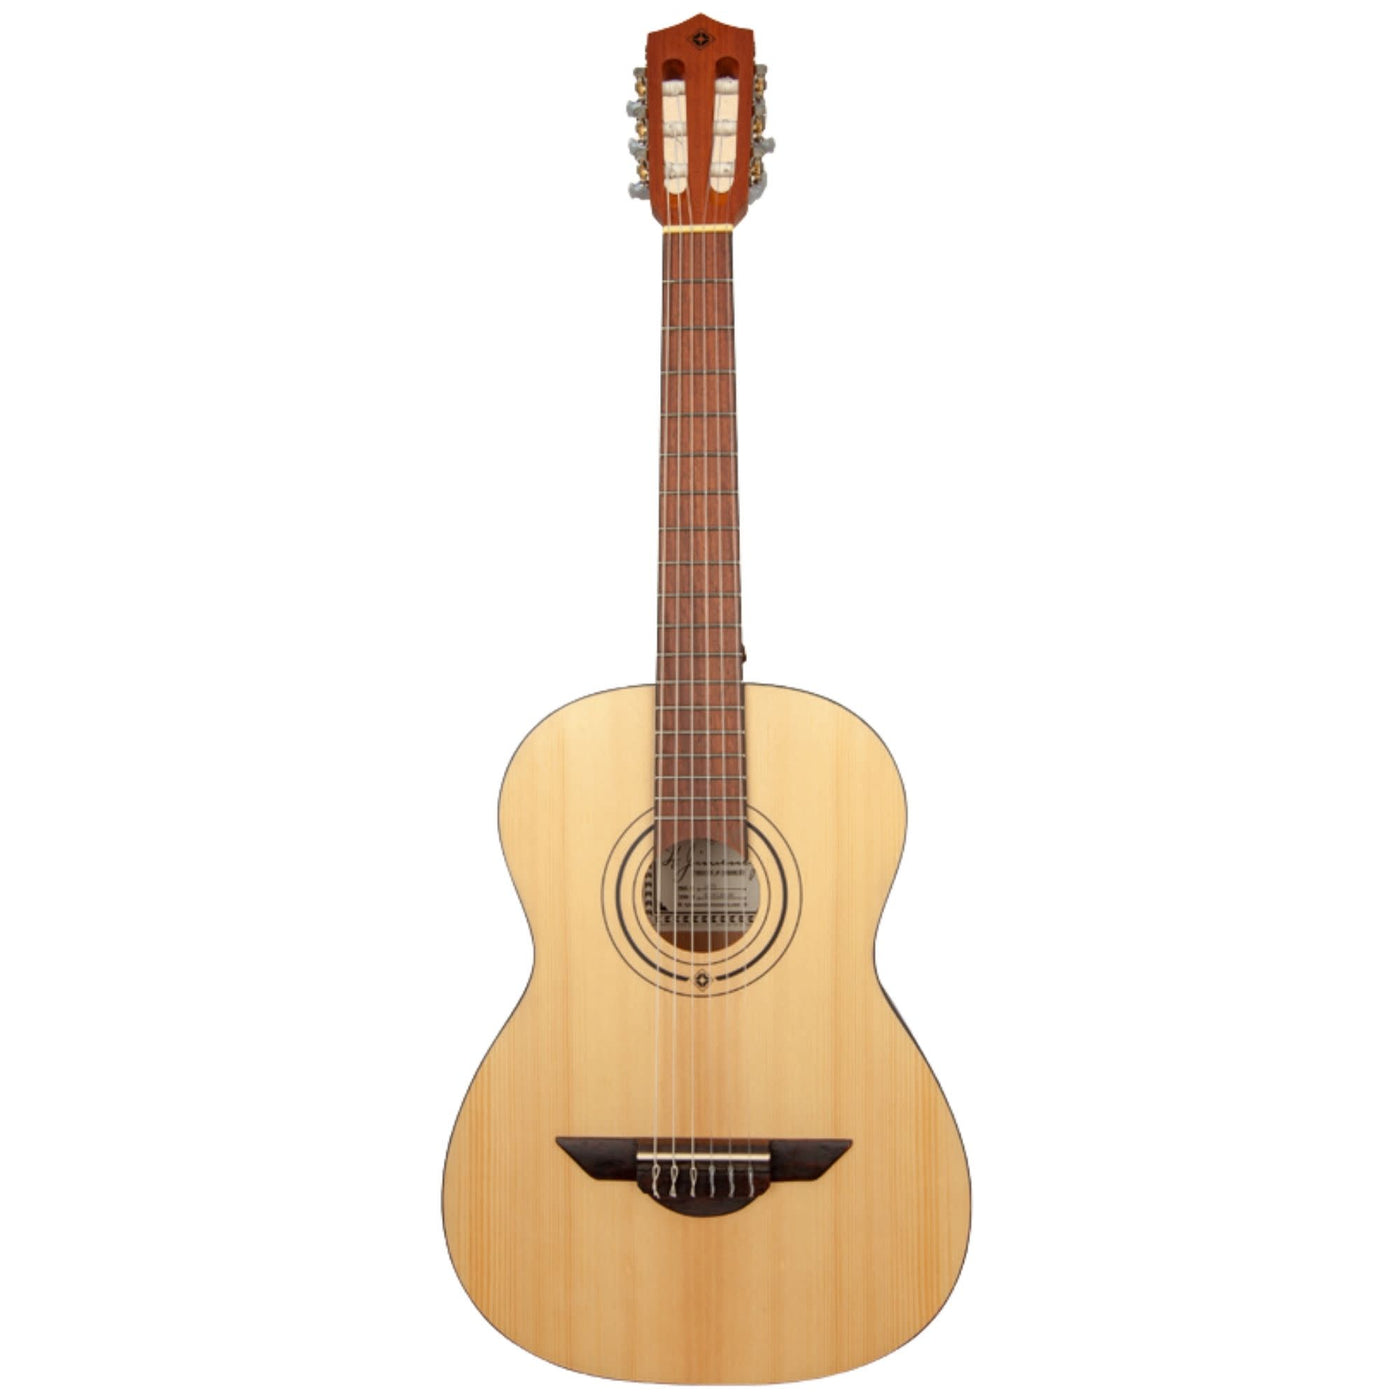 H. Jimenez LG75 Educativo Series 3/4 Size Nylon String Acoustic Guitar with Bag